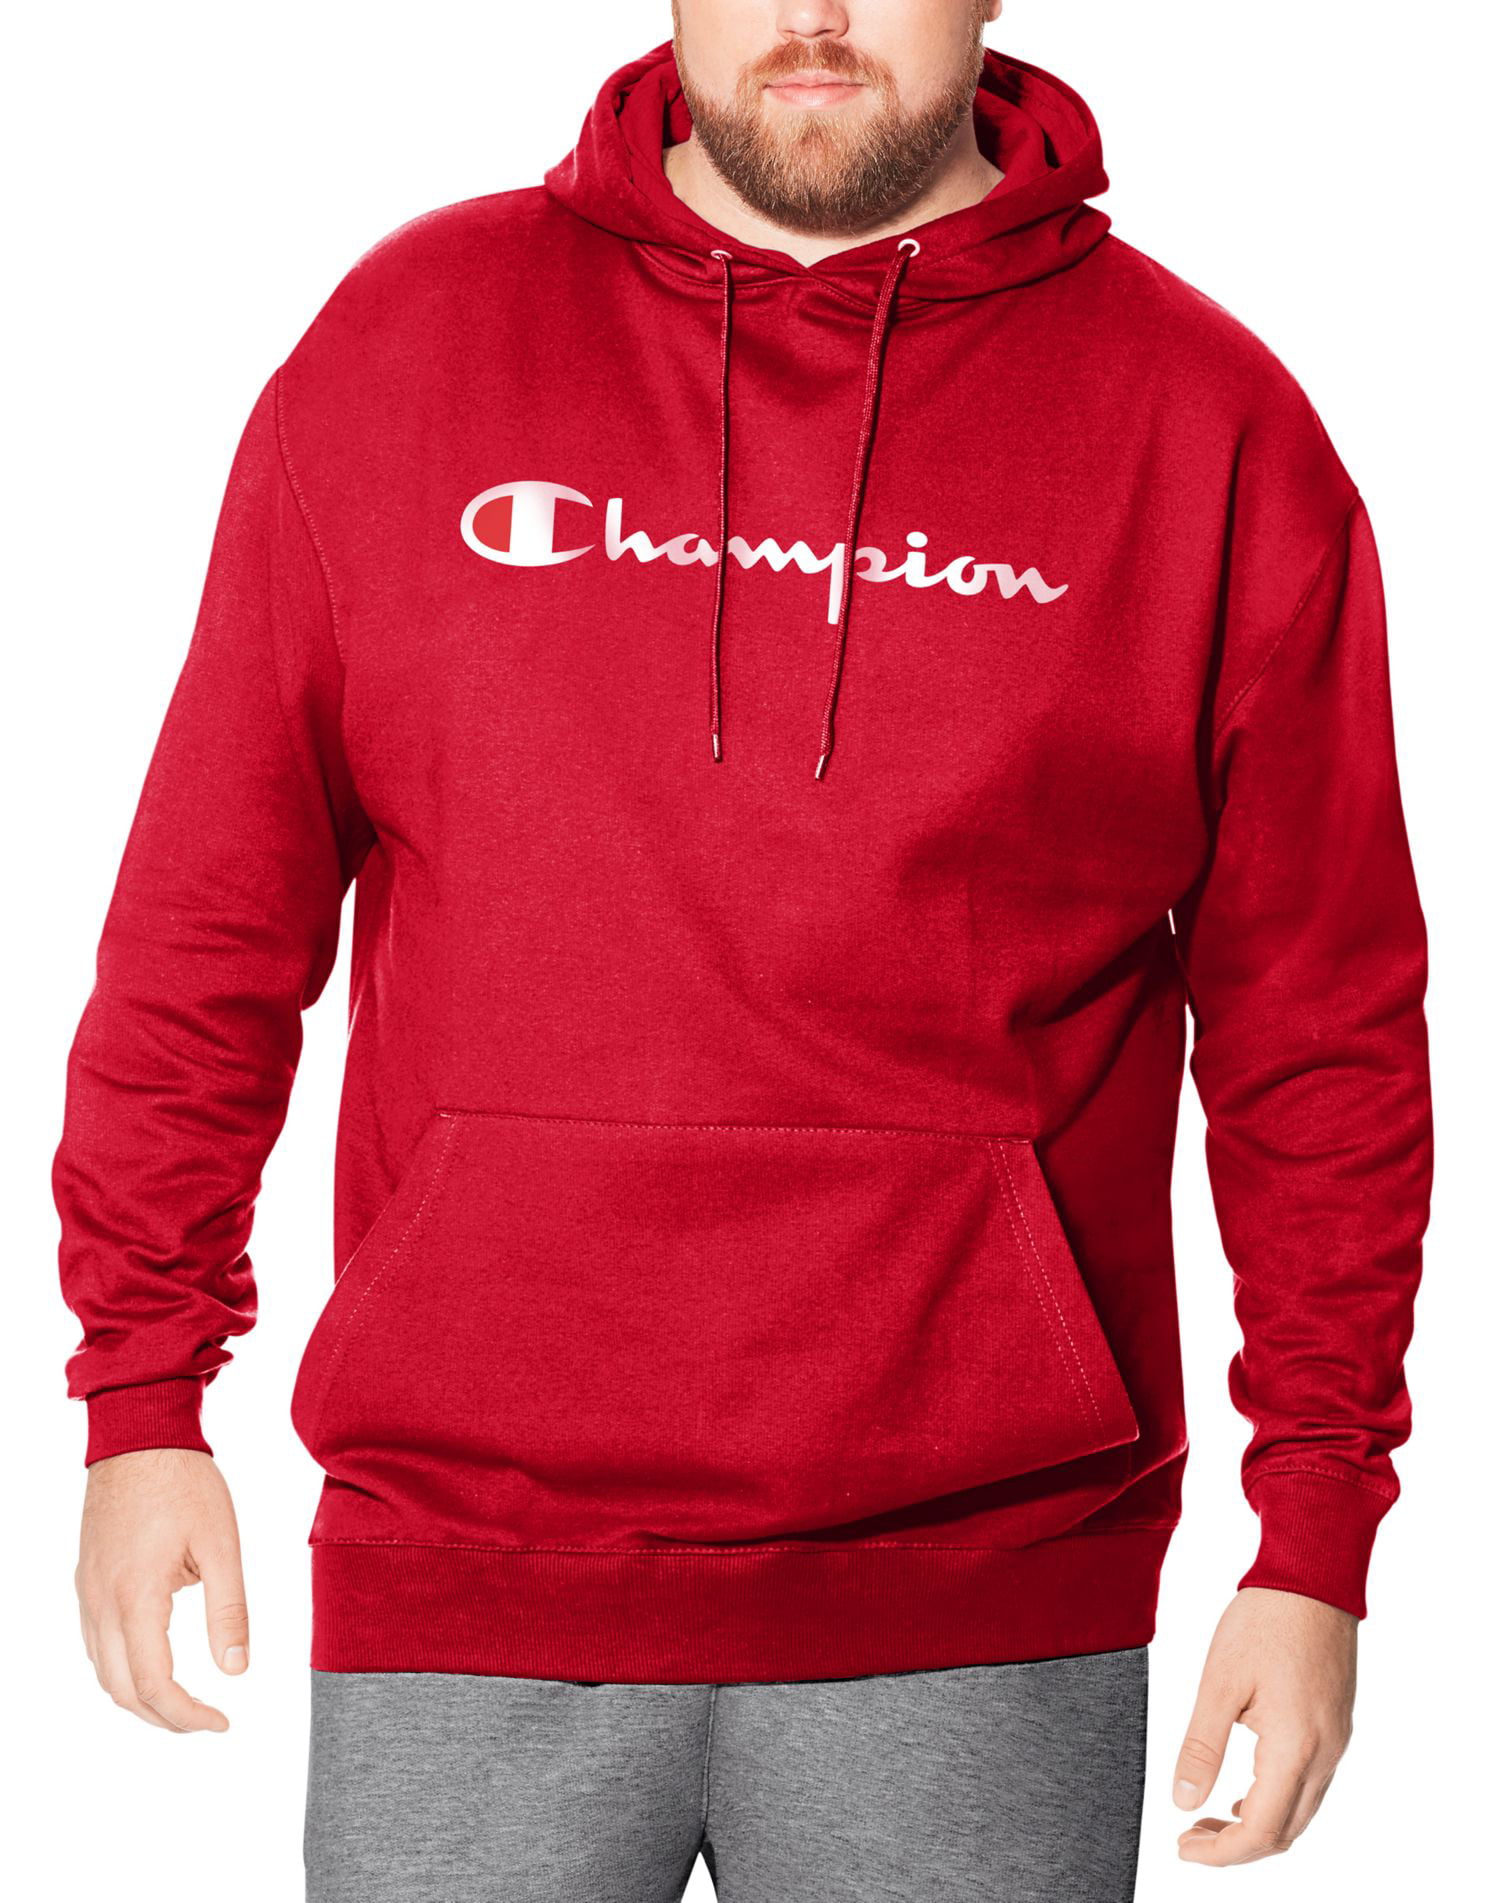 red champion hoodie mens